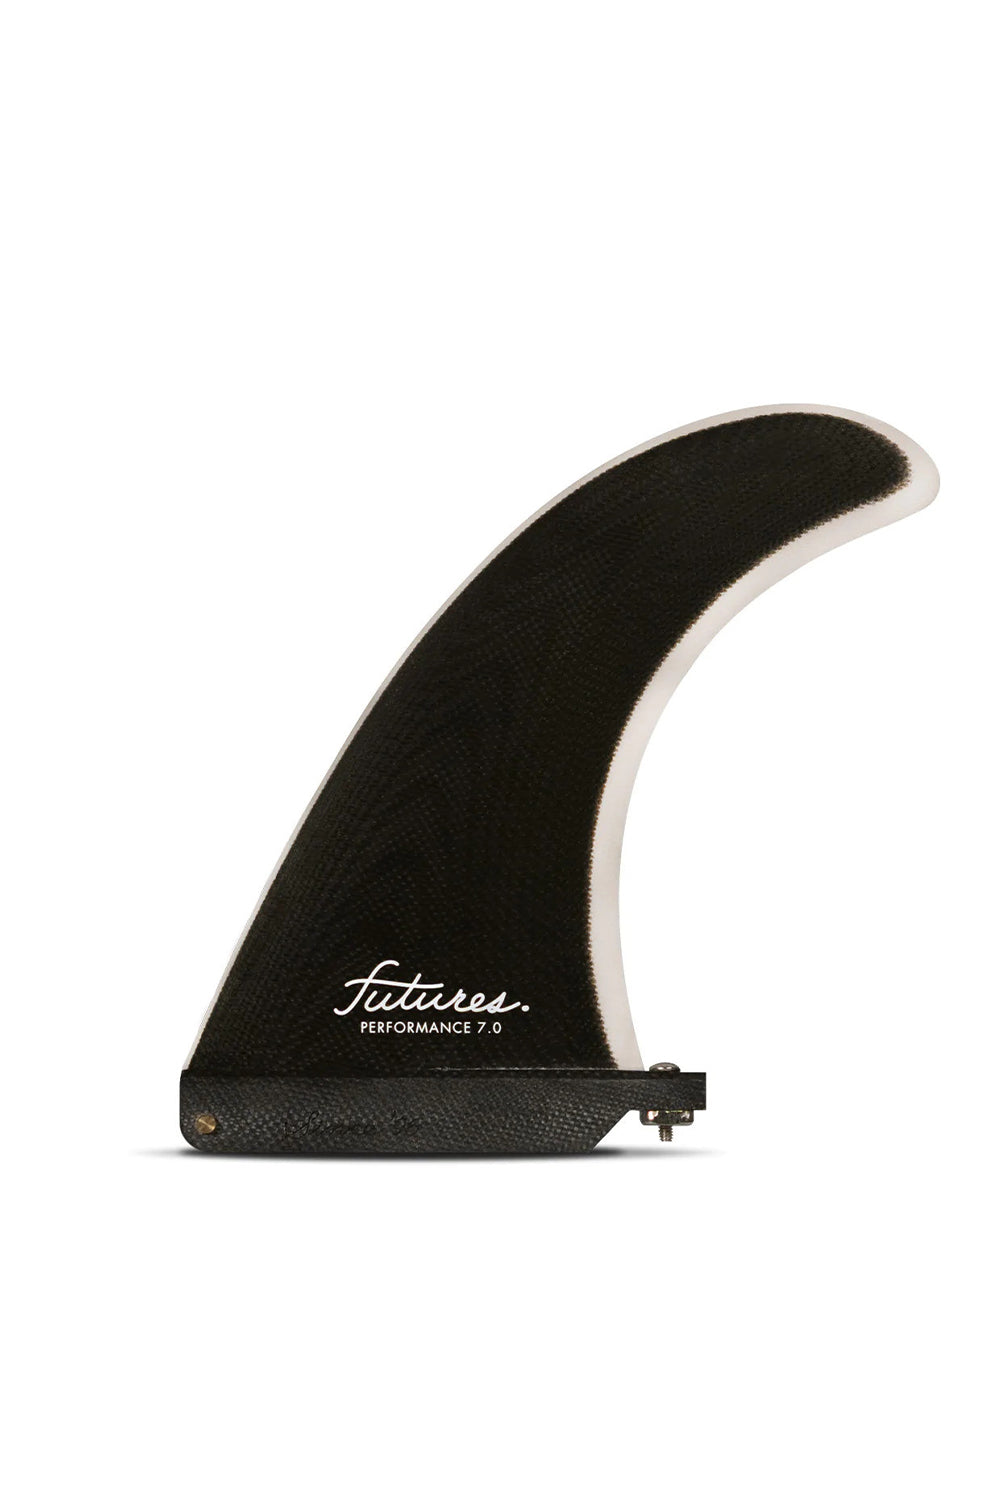 Futures Fins Performance 7.0 Fiberglass Single Longboard Fin - Black / Grey